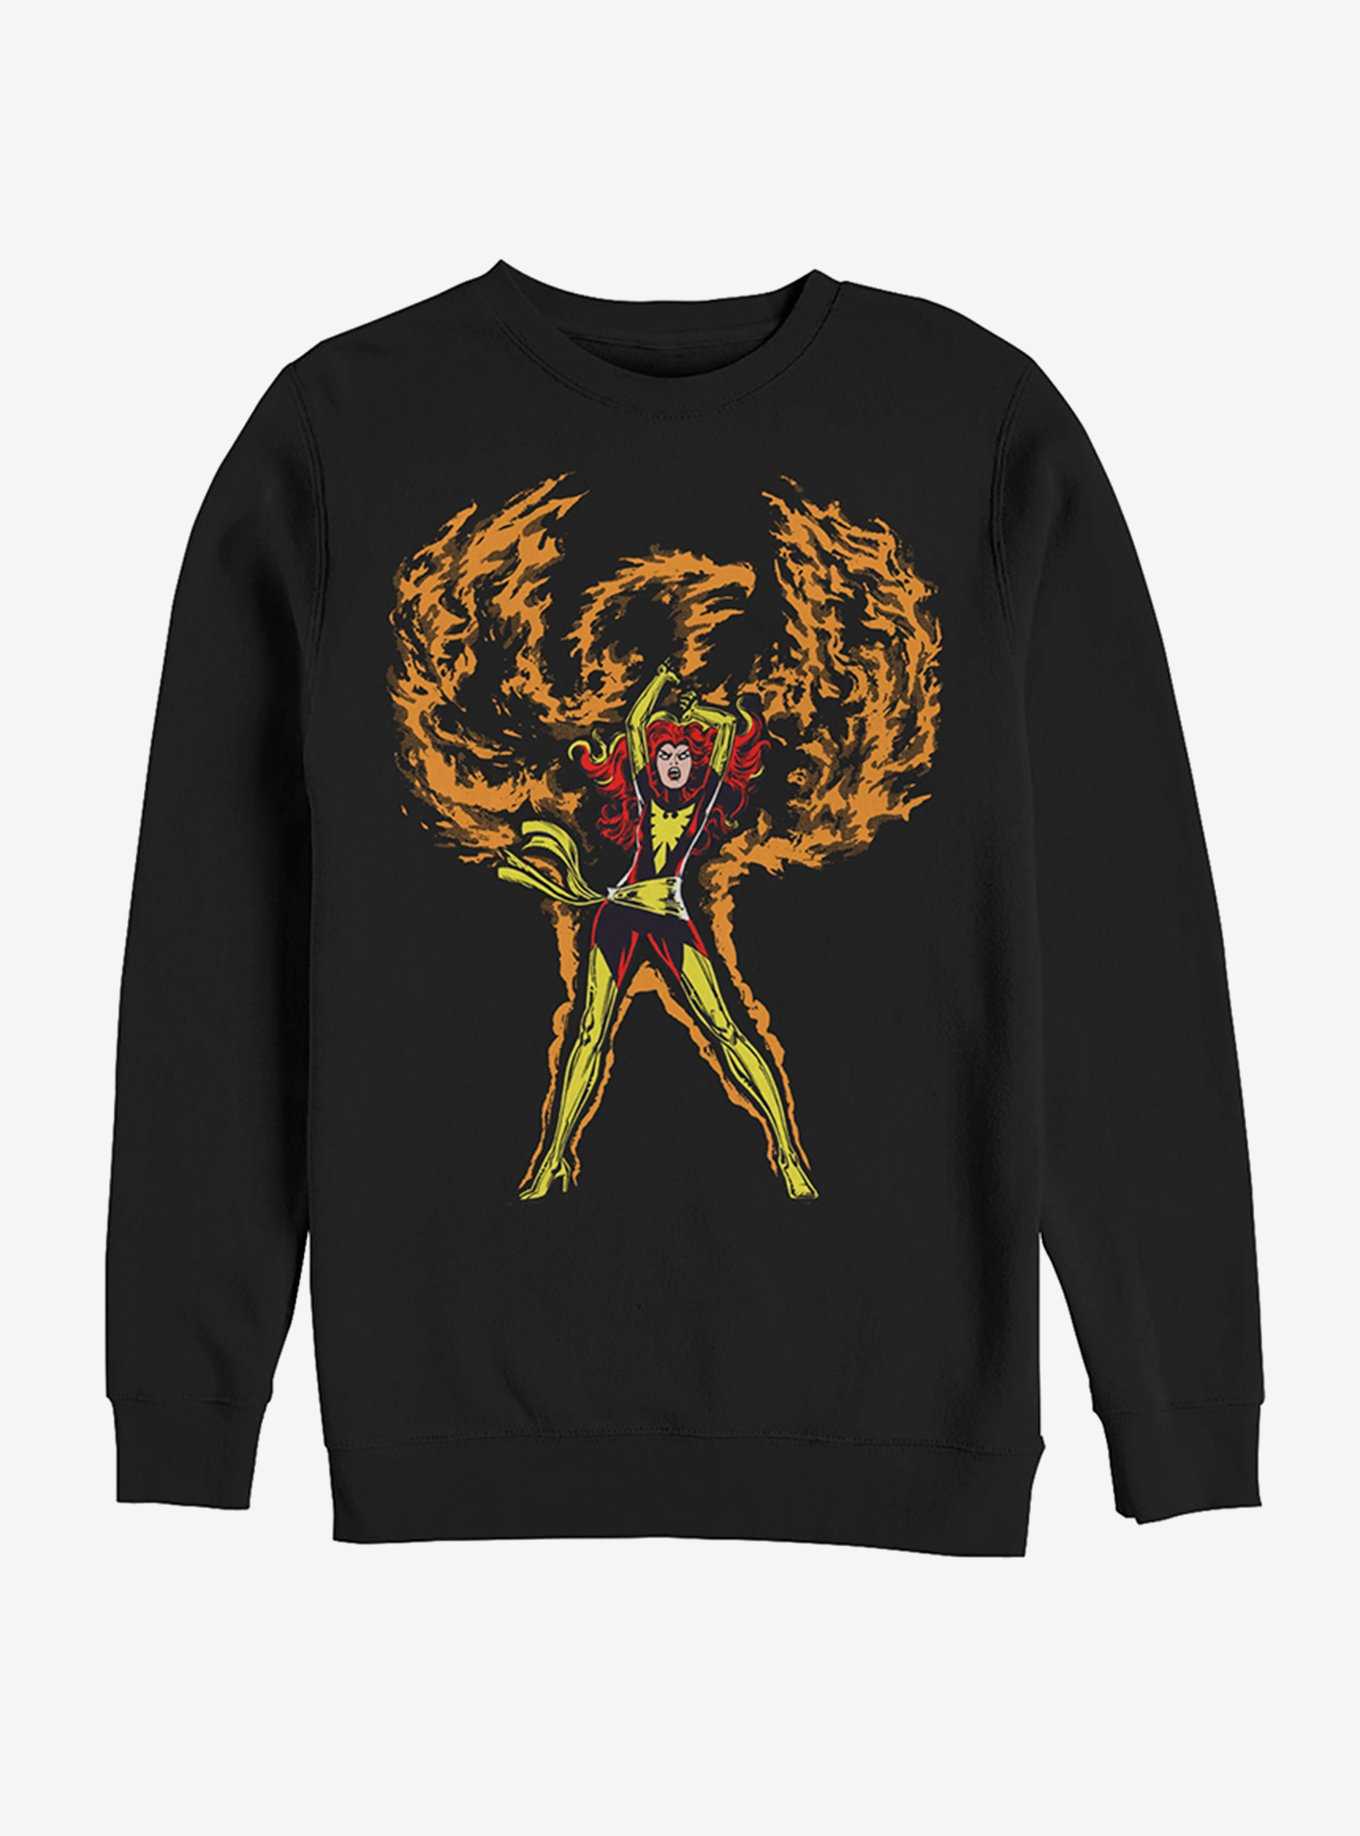 Marvel X-Men Dark Phoenix Phoenix Rises Sweatshirt, , hi-res